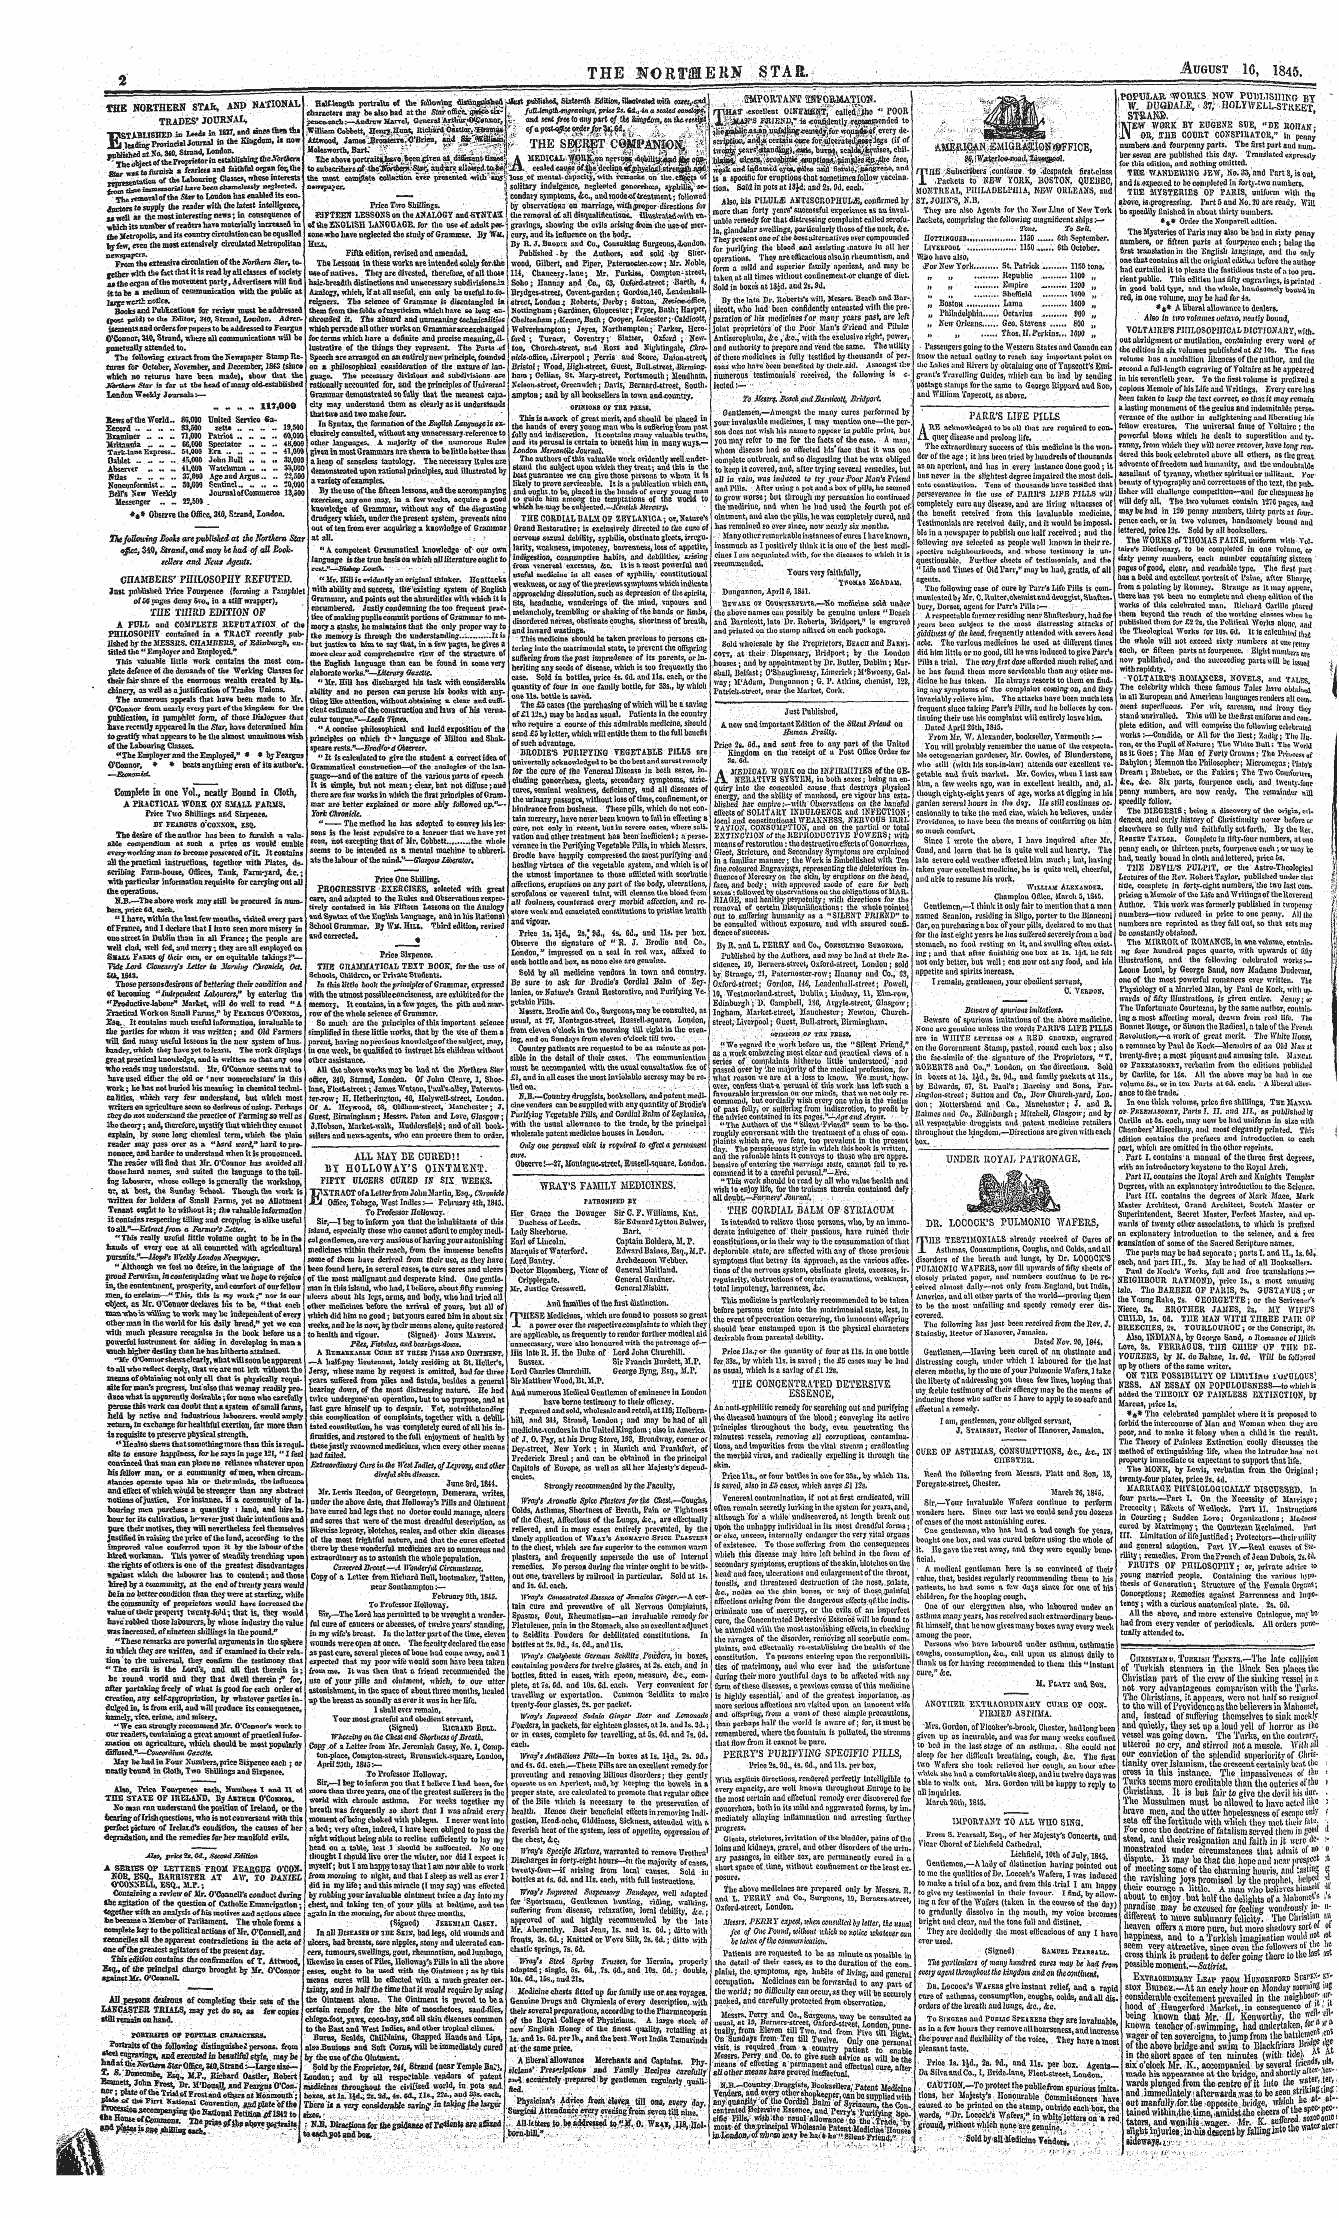 Northern Star (1837-1852): jS F Y, 3rd edition - Ad00205